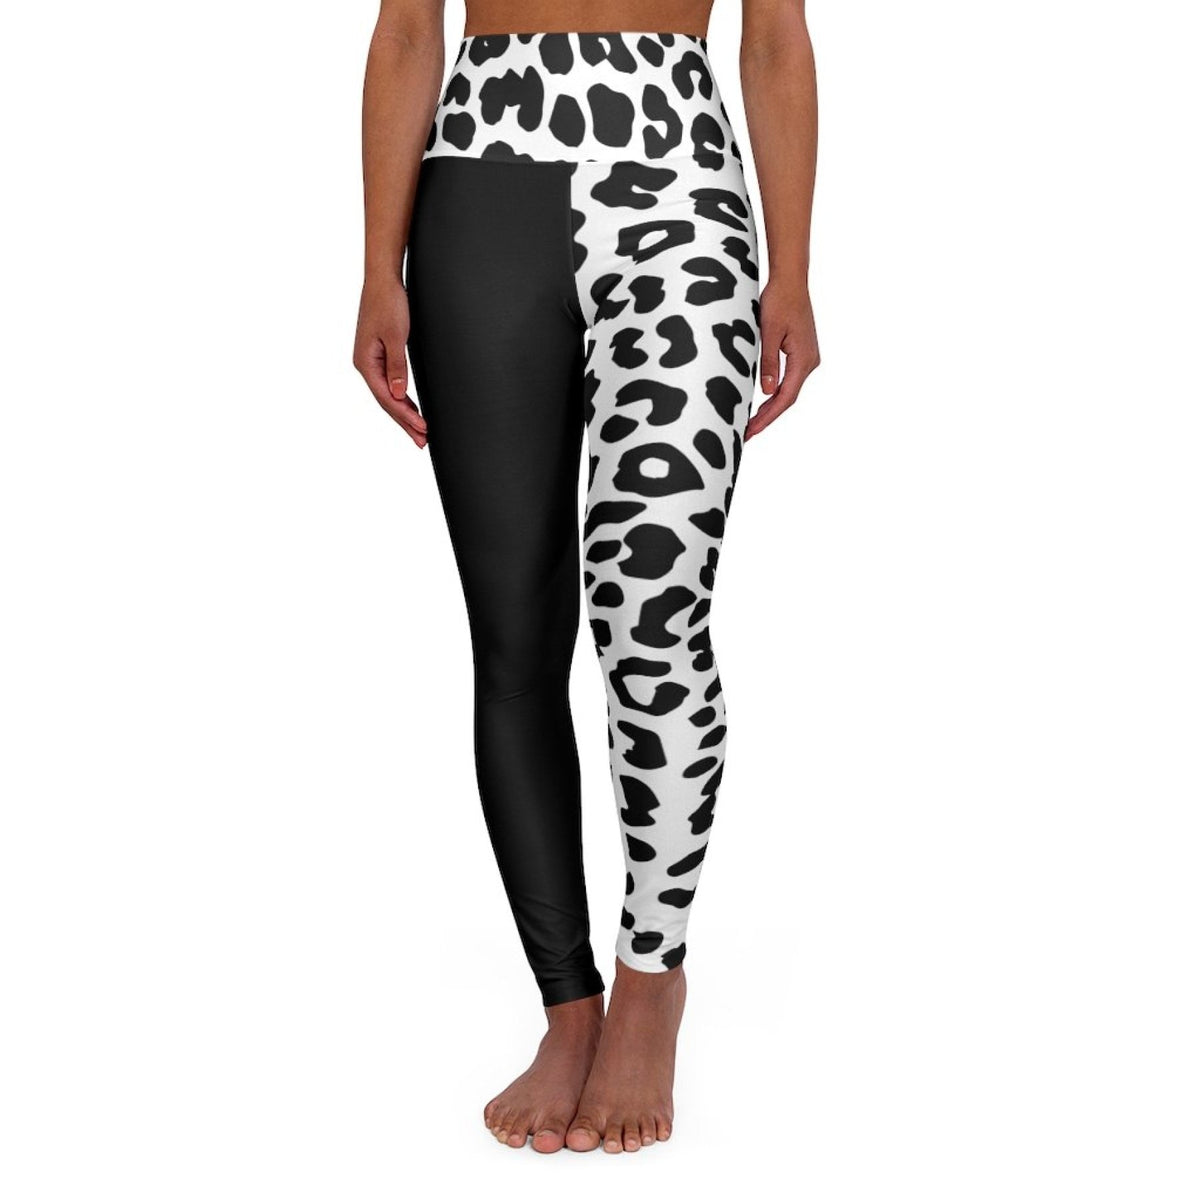 High Waisted Yoga Leggings, Black And White Half-Tone Leopard Style Angelwarriorfitness.com